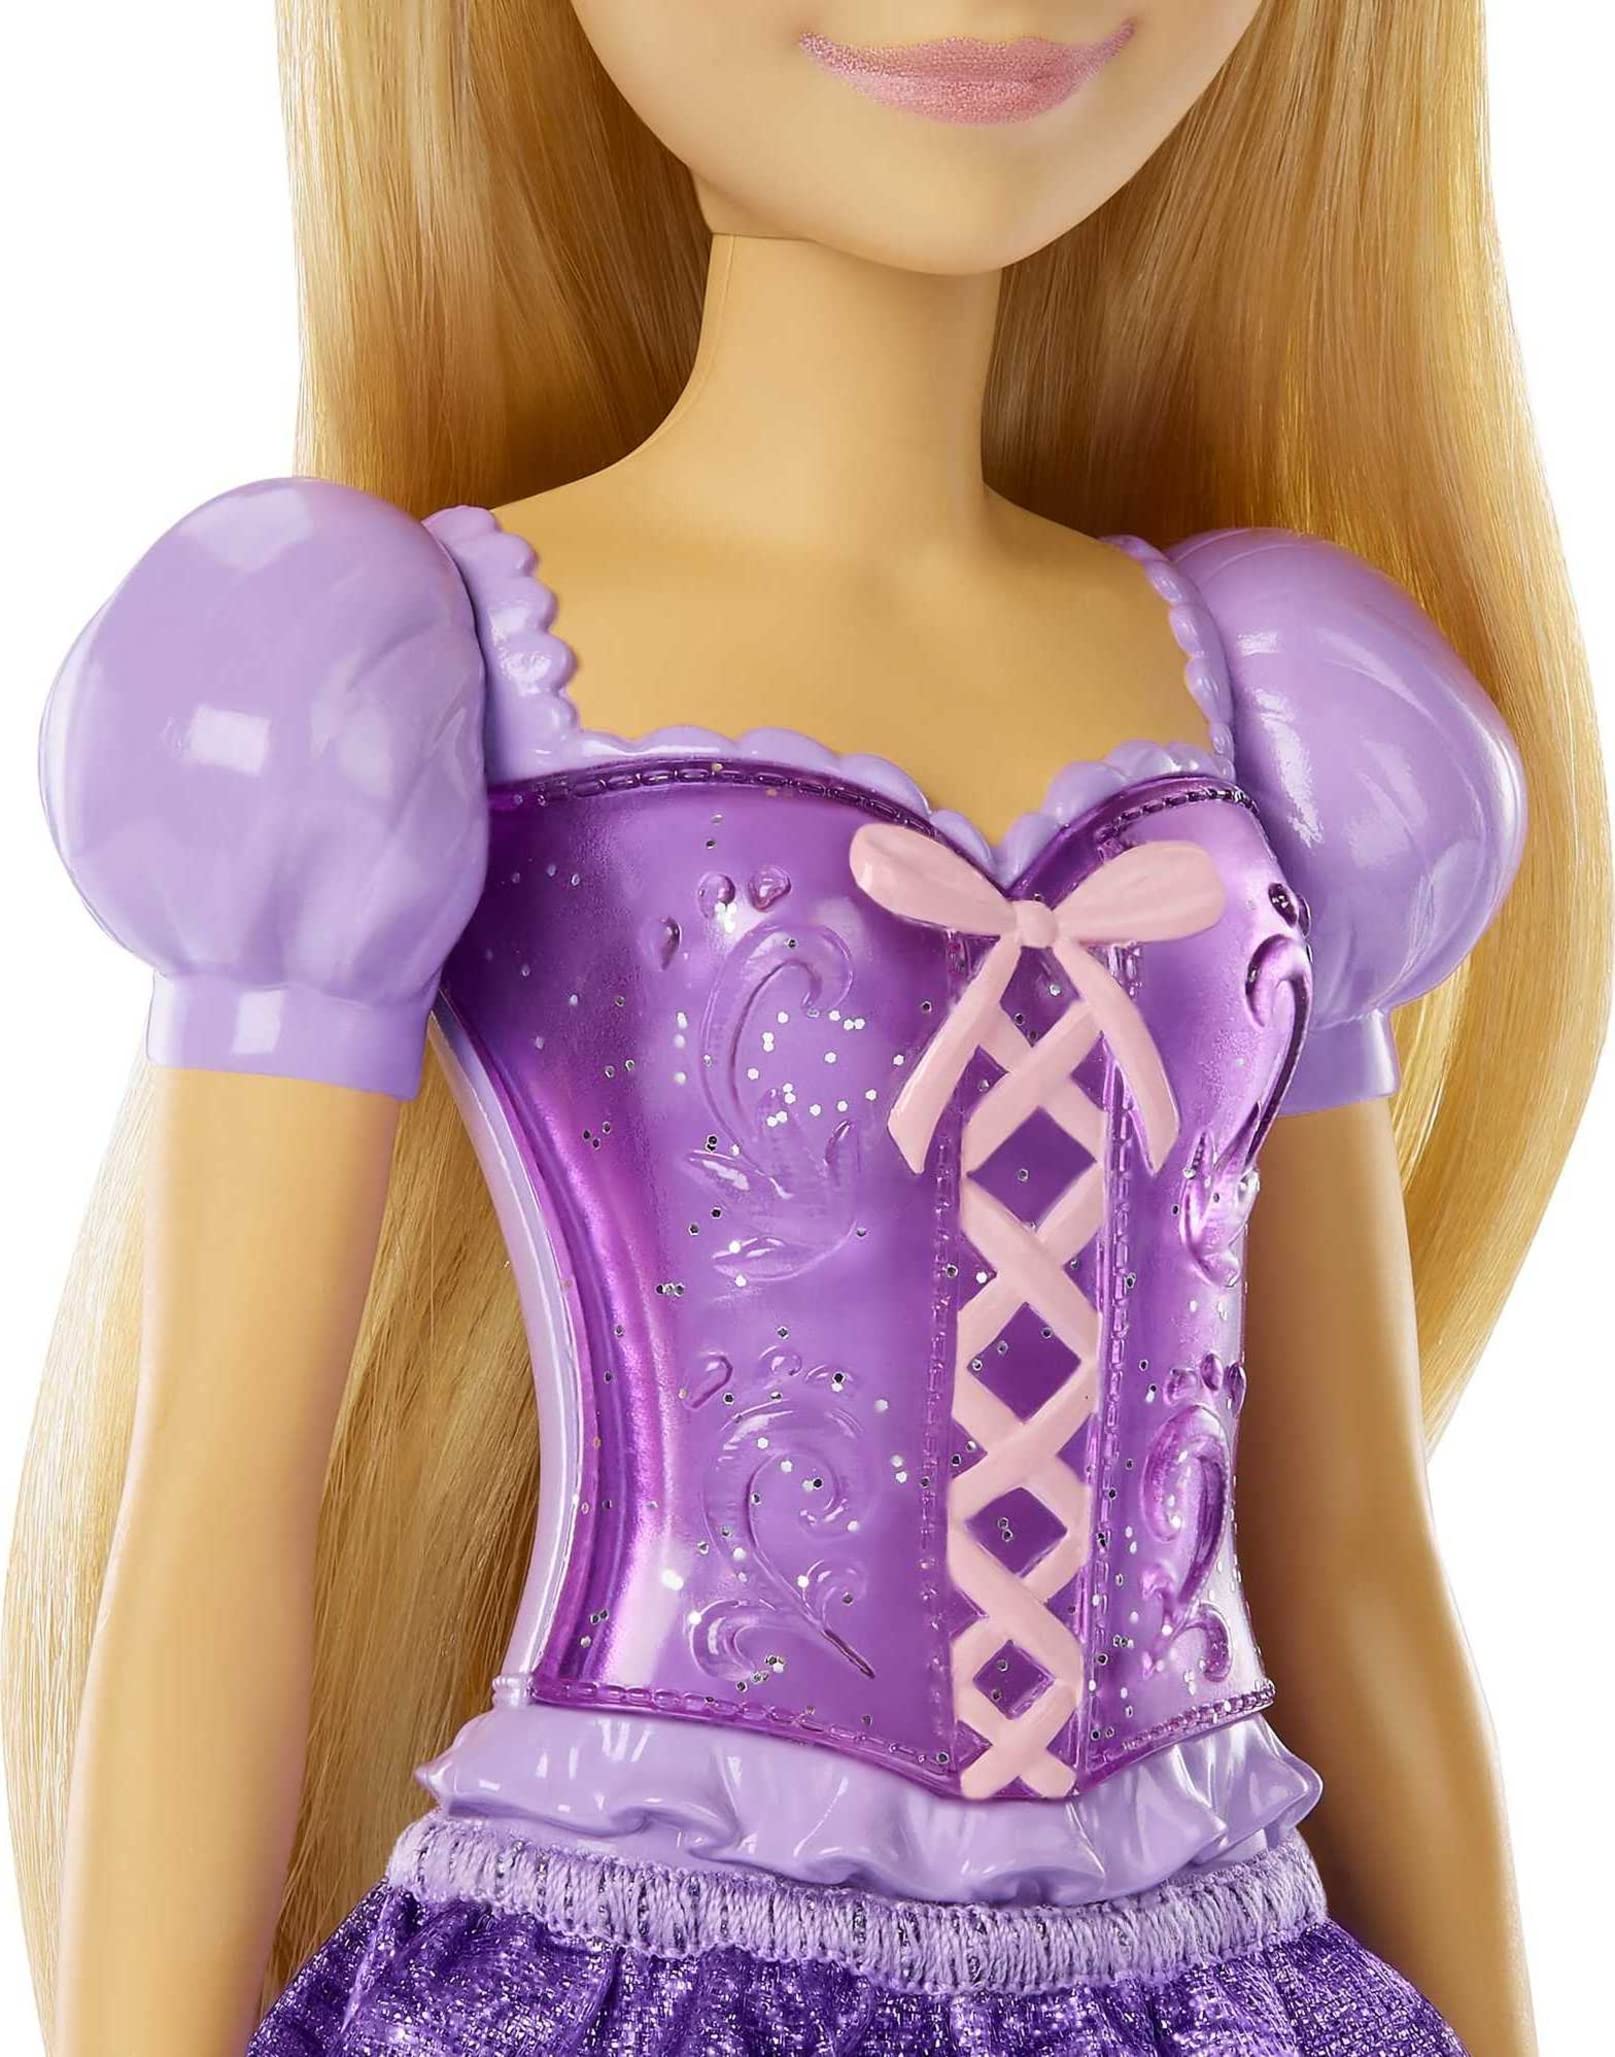 Mattel Disney Princess Rapunzel Fashion Doll, Sparkling Look with Blonde Hair, Blue Eyes & Tiara Accessory